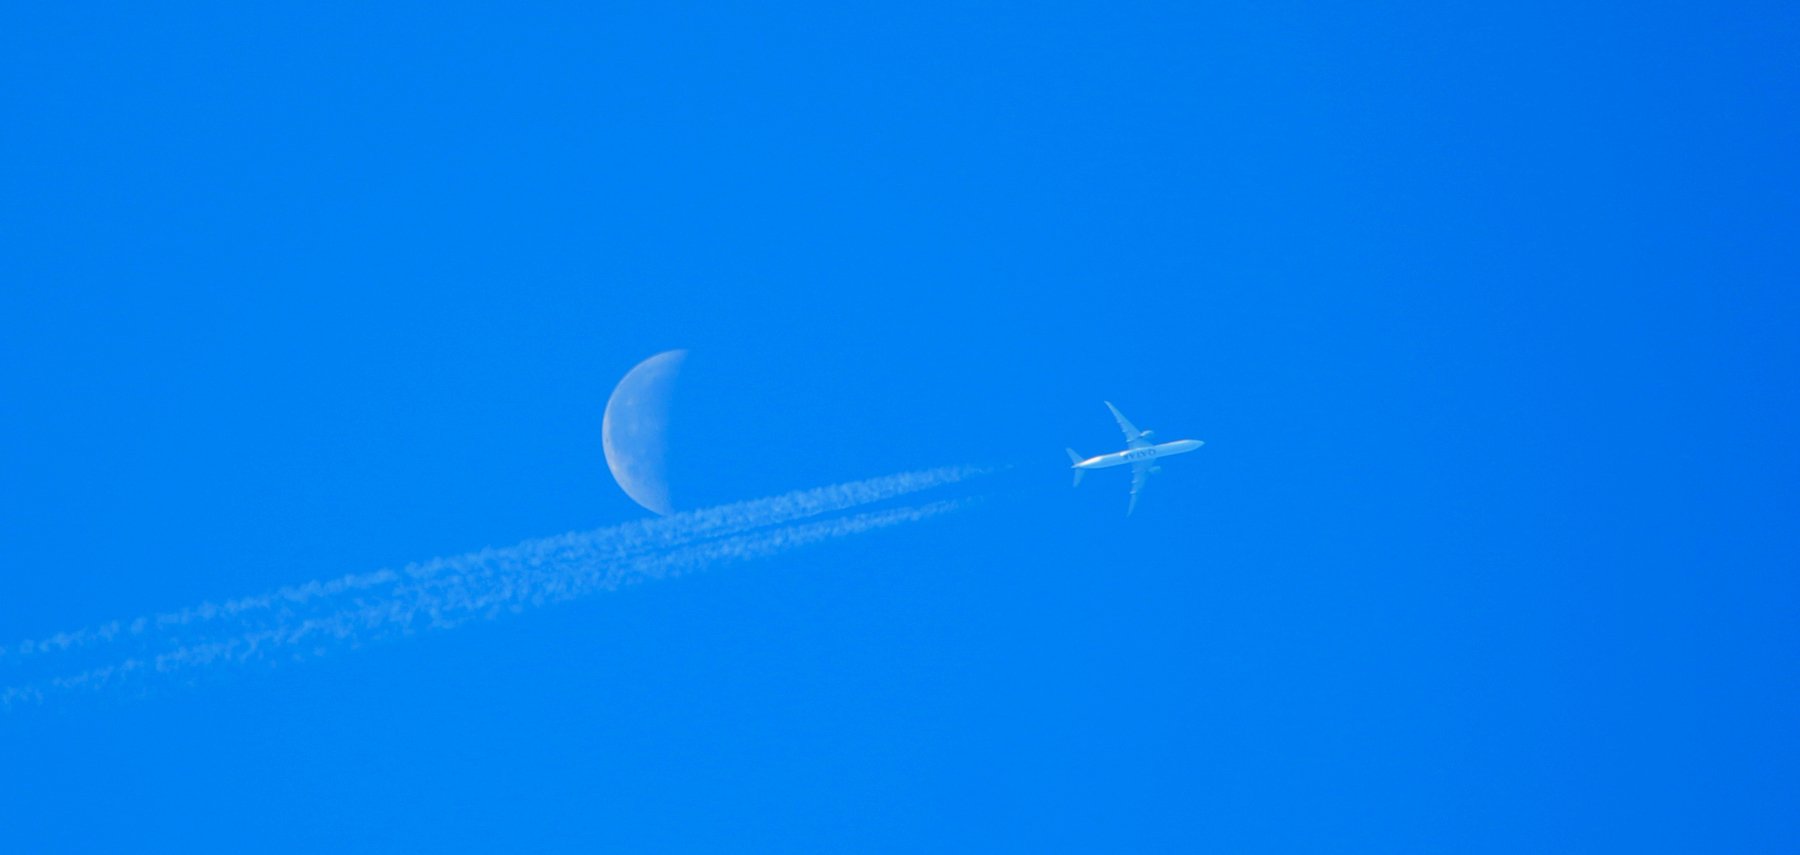 шаварёв, небо, самолёт, луна, фотография,, Александр Шаварёв